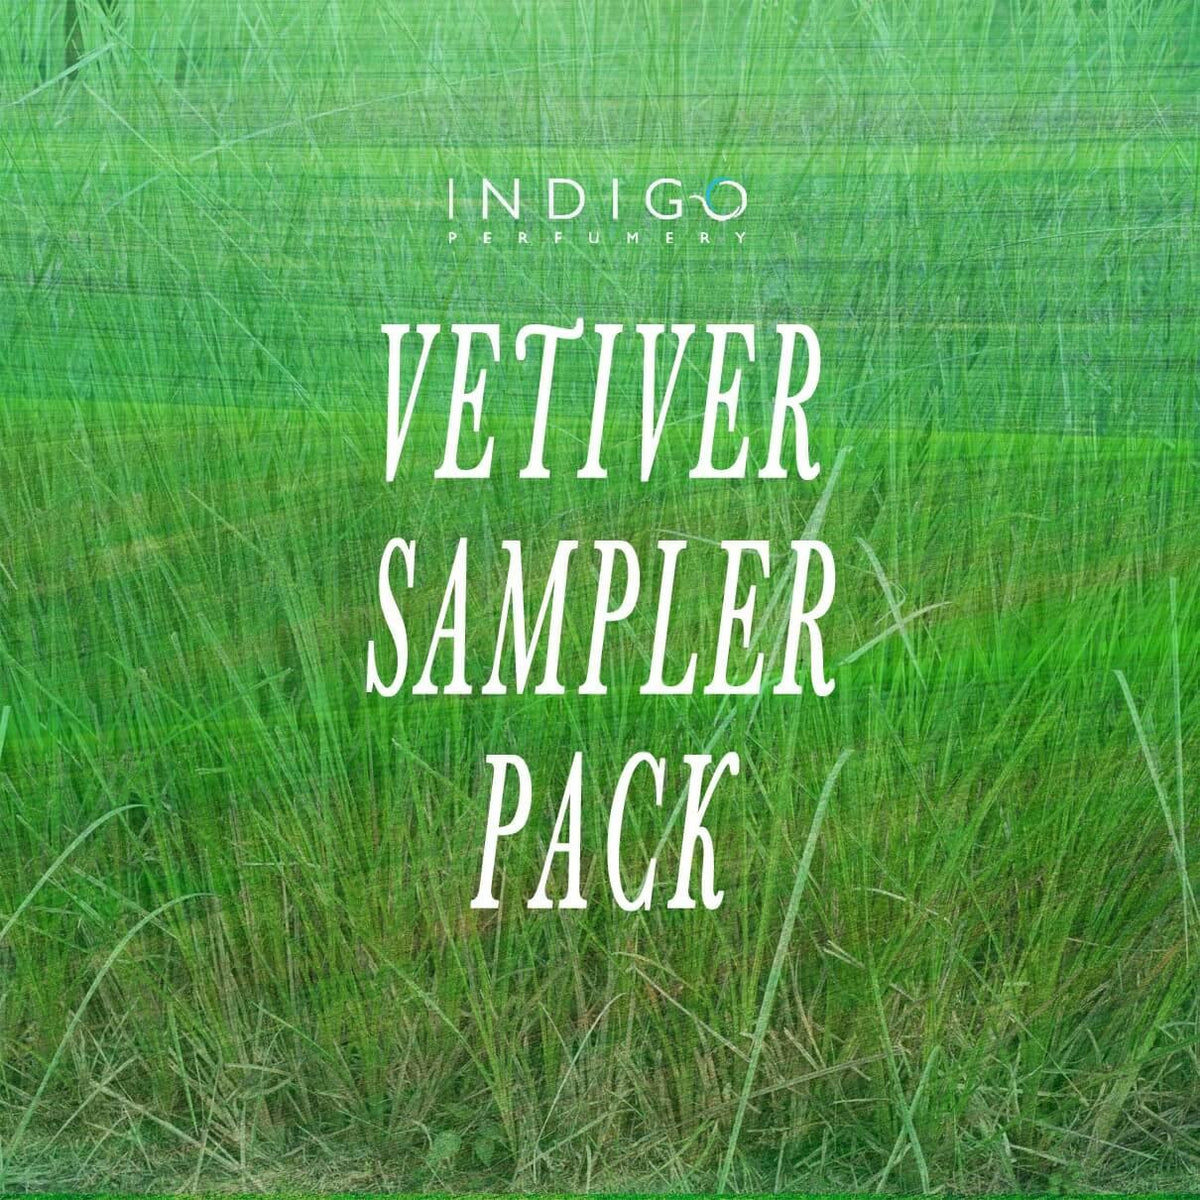 Vetiver Sampler Pack at Indigo - Indigo Perfumery